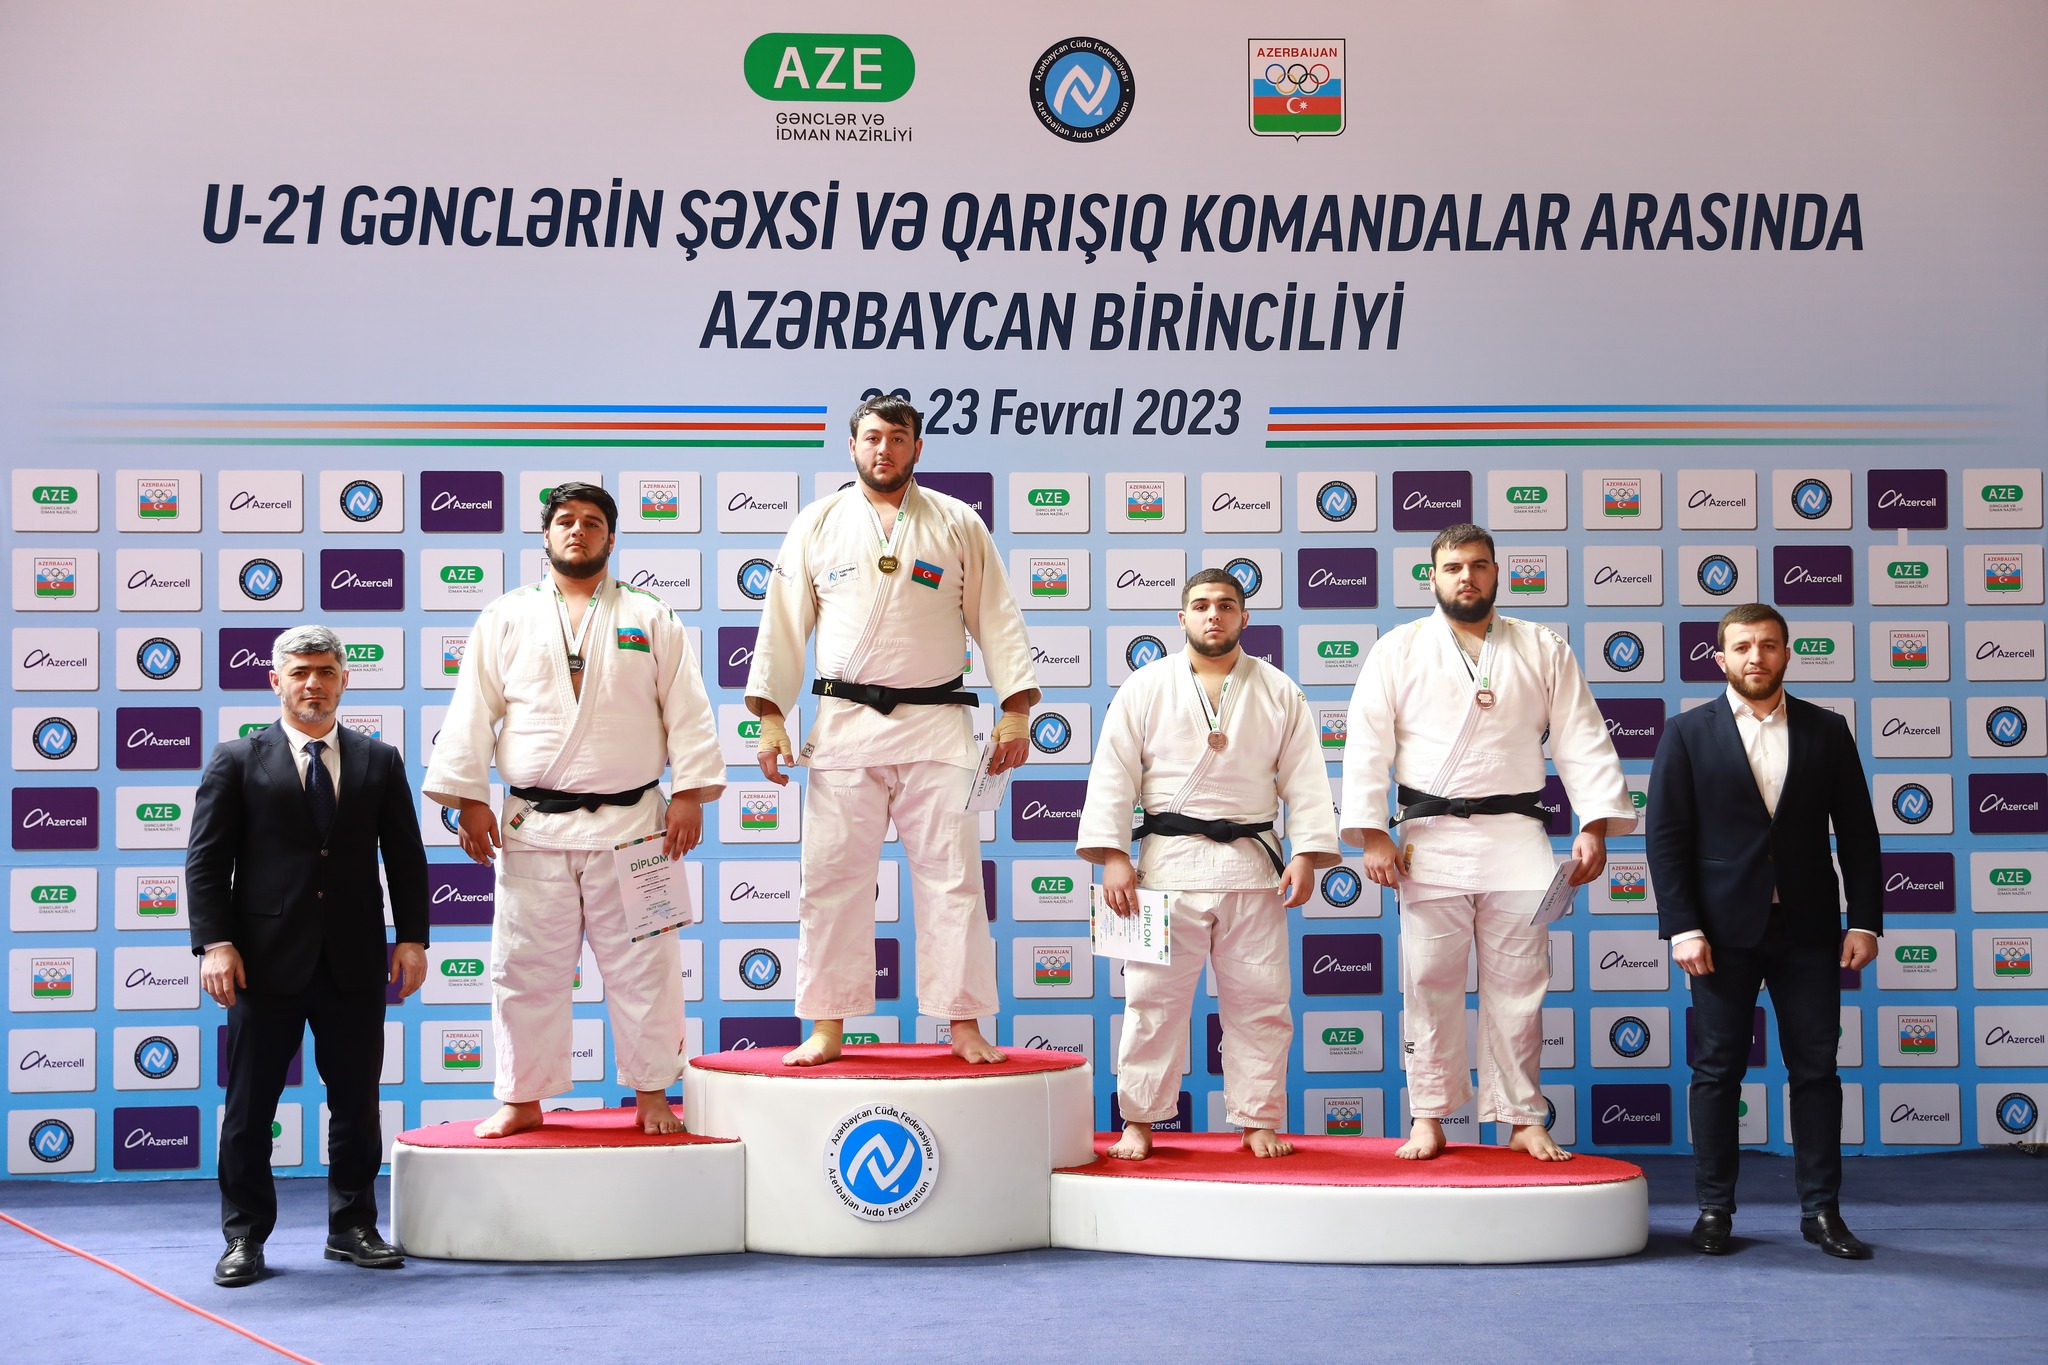 img/posts/azerbaycan-birinciliyi-genc-cudocularimiz-ucun-iki-medalla-yadda-qaldi-2023-02-23-232424/1.jpg